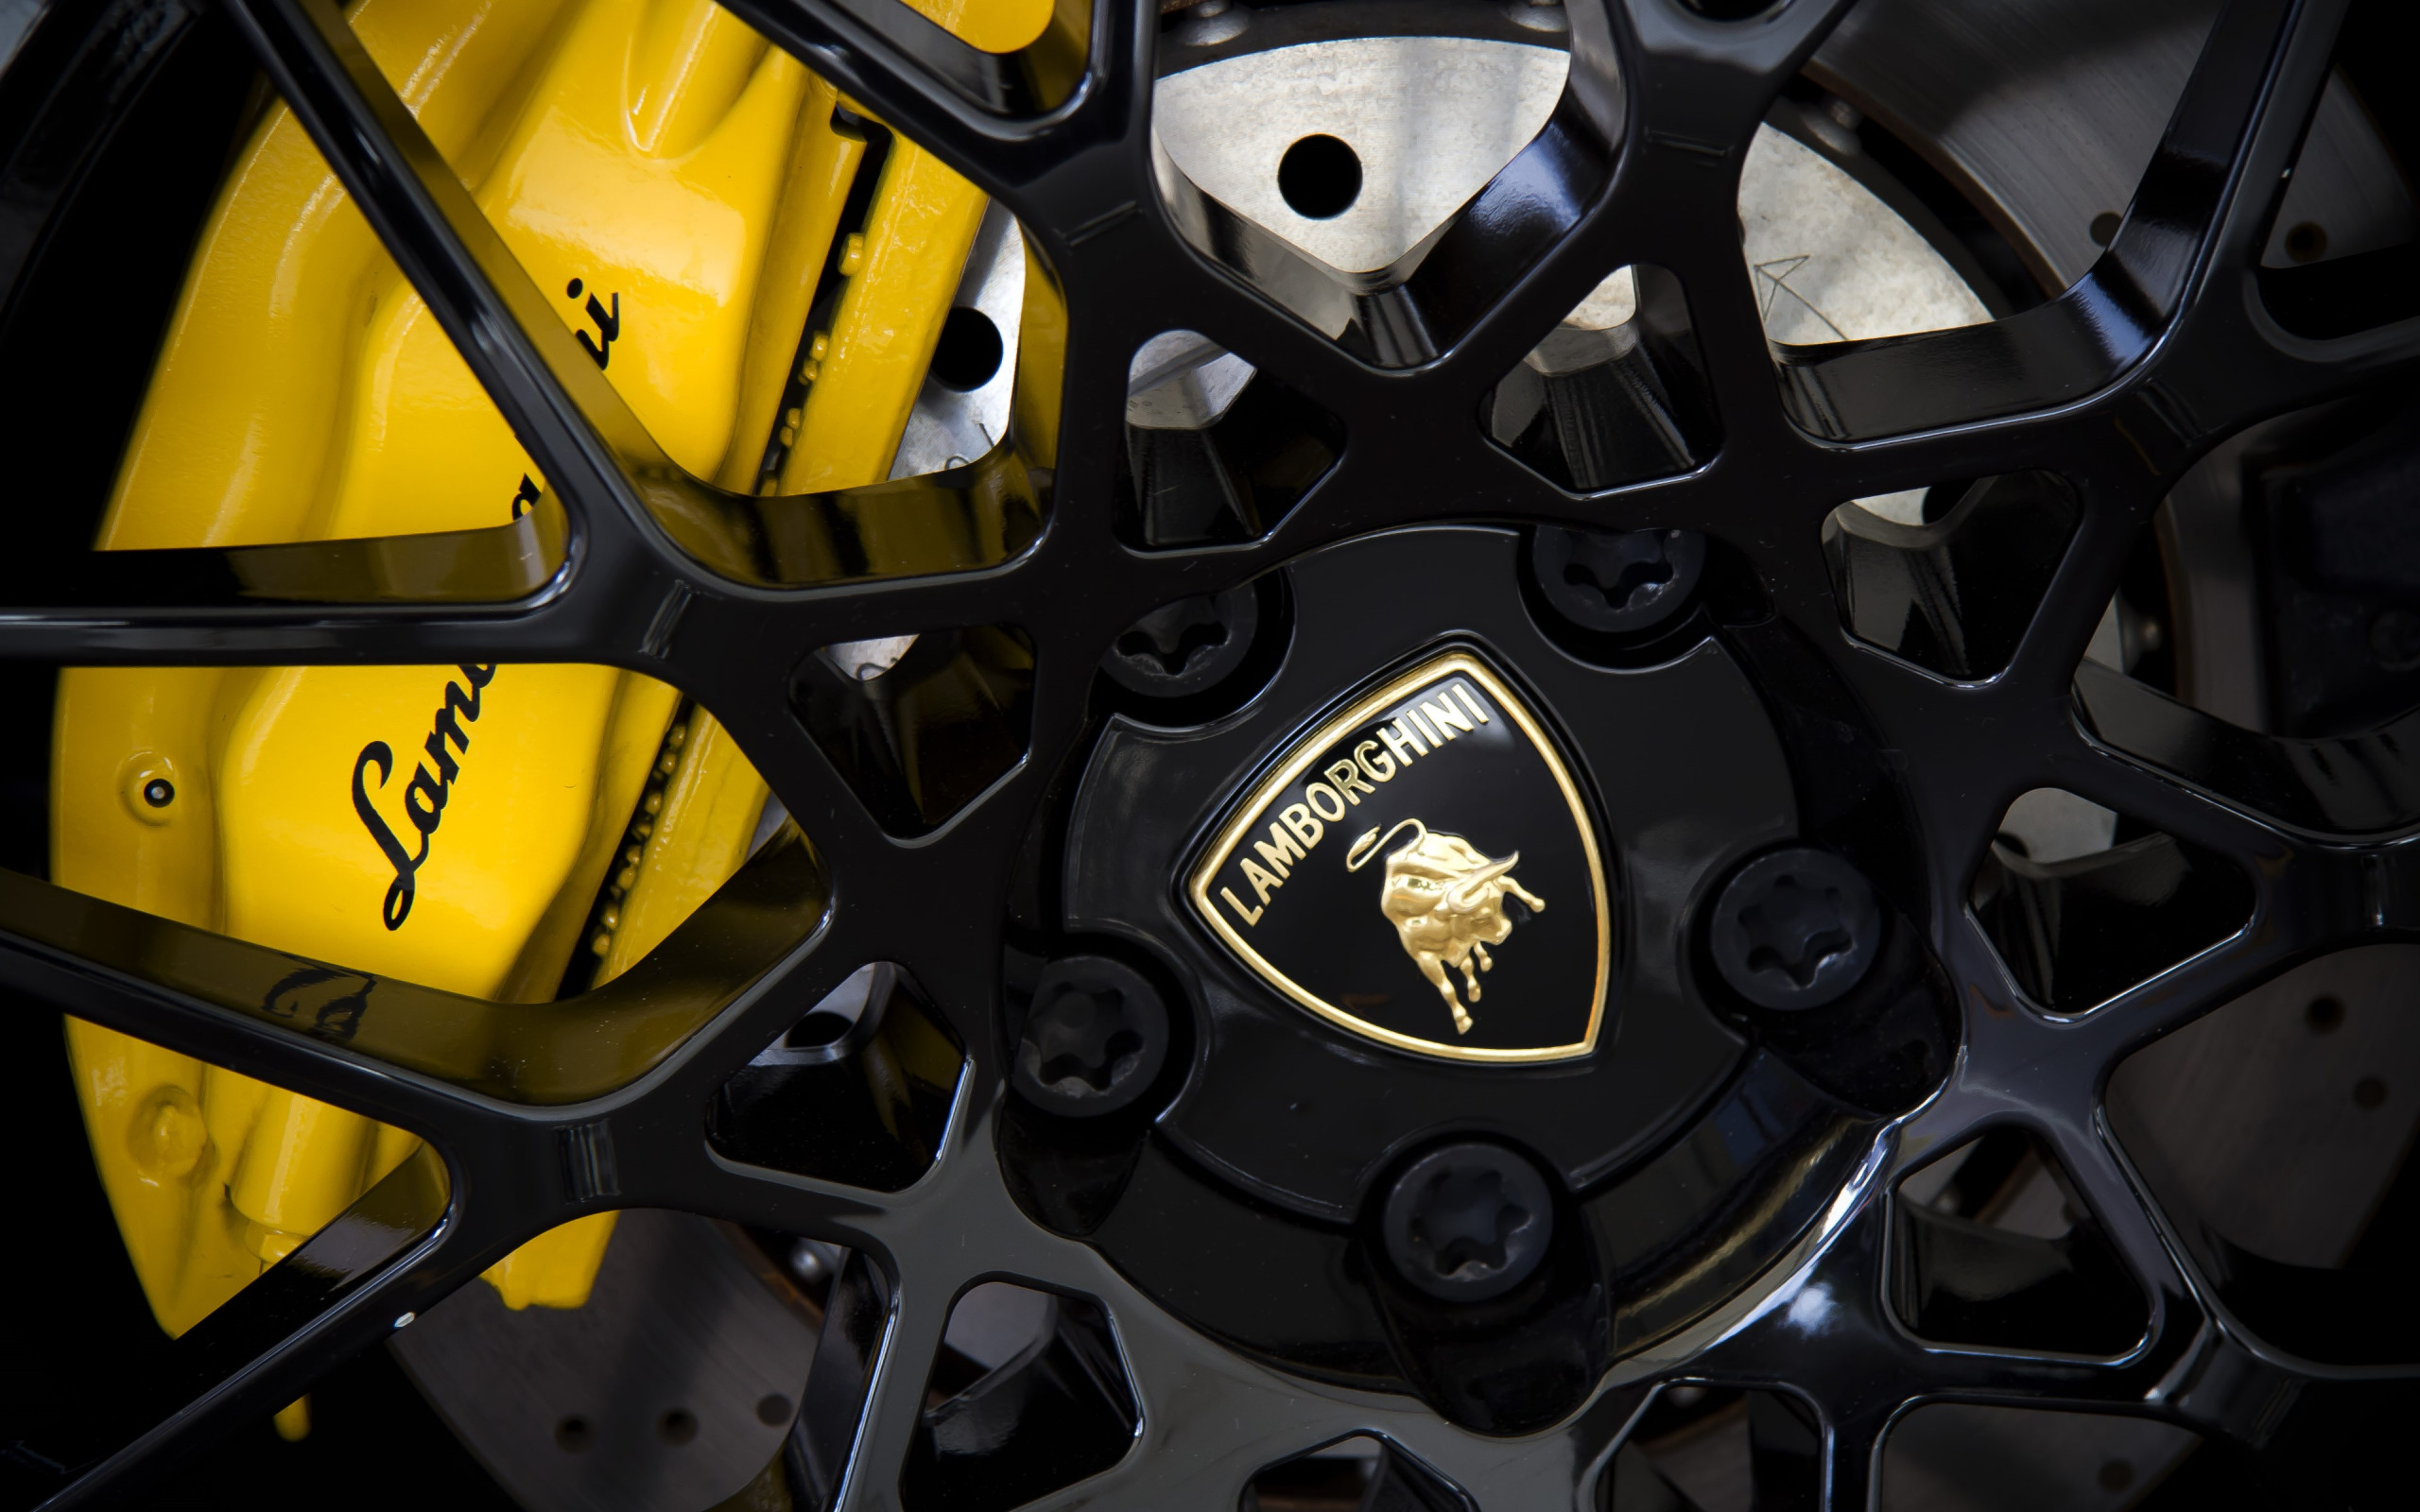 Download wallpaper: Lamborghini wheel 2560x1600